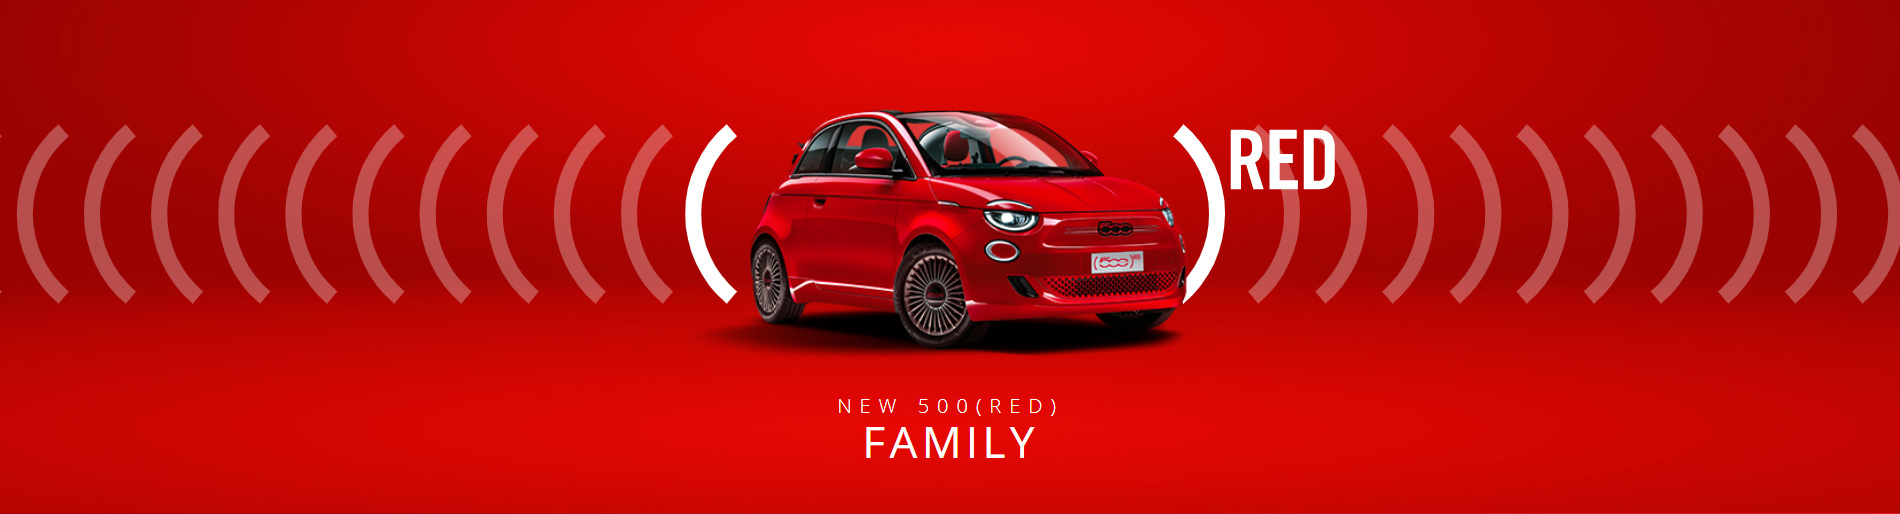 Fiat RED Banner